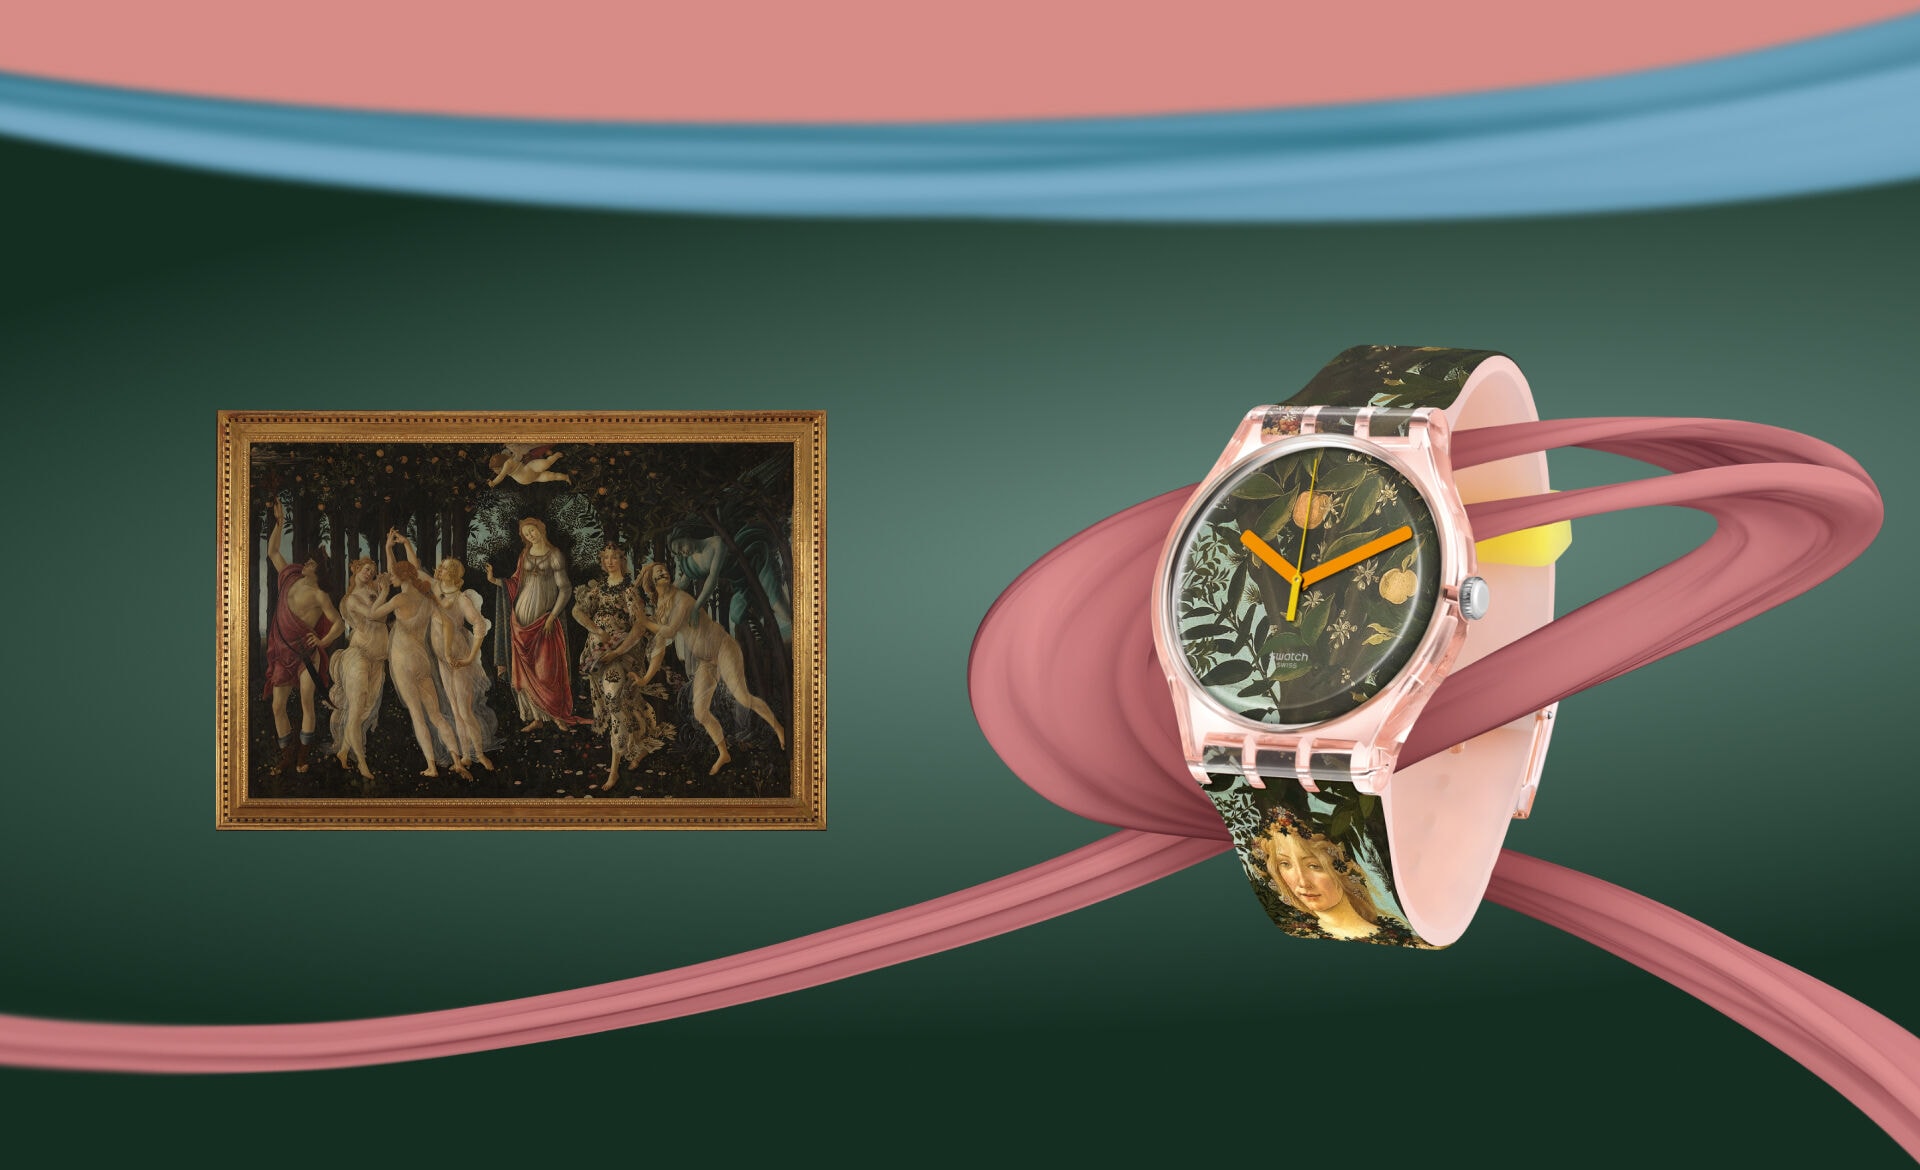 Swatch x Uffizi Galleries museum collaboration